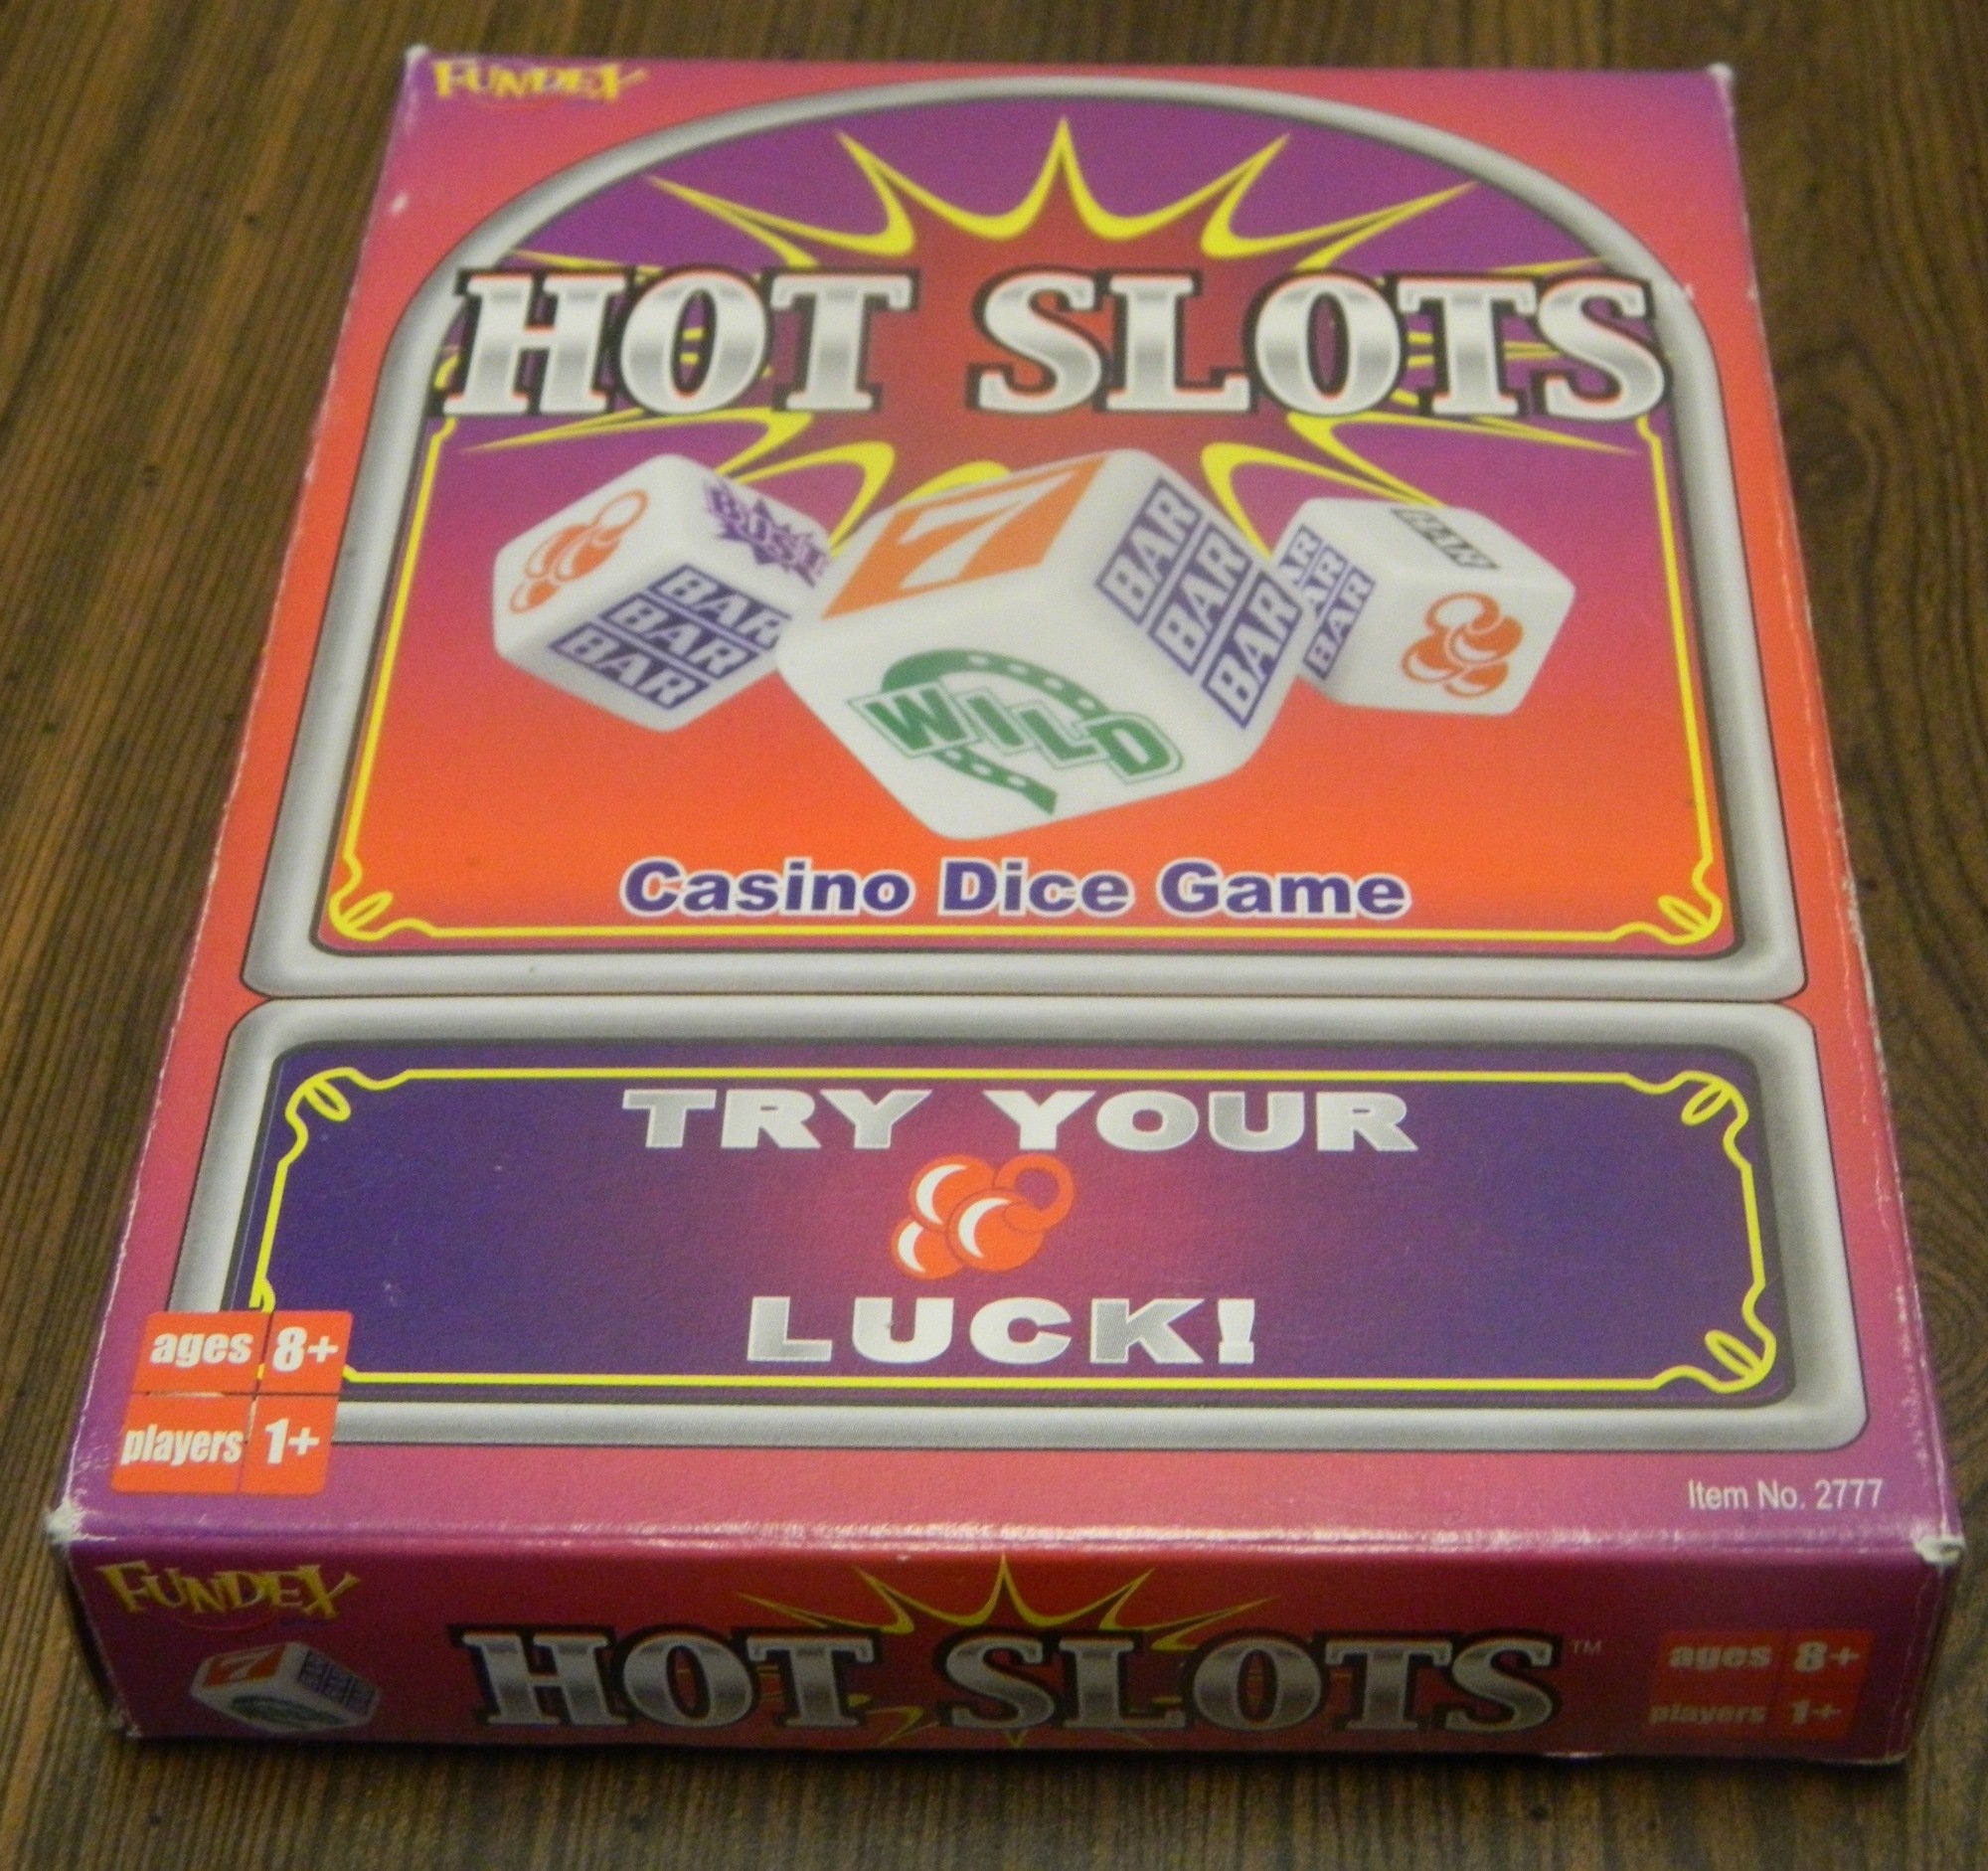 Hot Slots Casino Dice Game